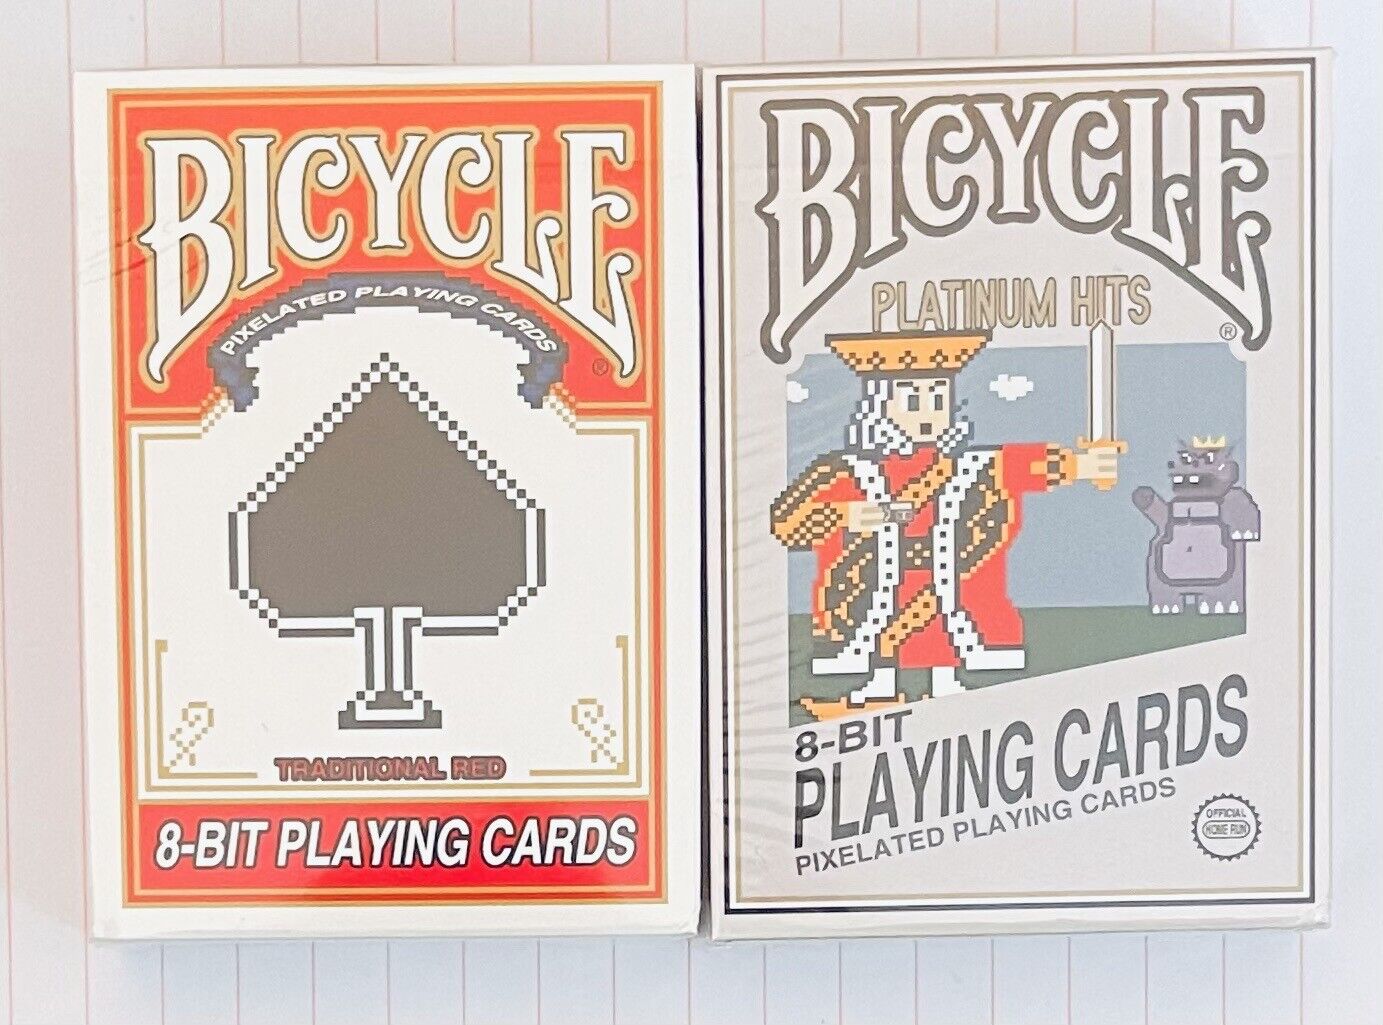 Bicycle 8-Bit Red & Platinum Hits Pixelated Playing Cards 2013 Decks Set *Dinged